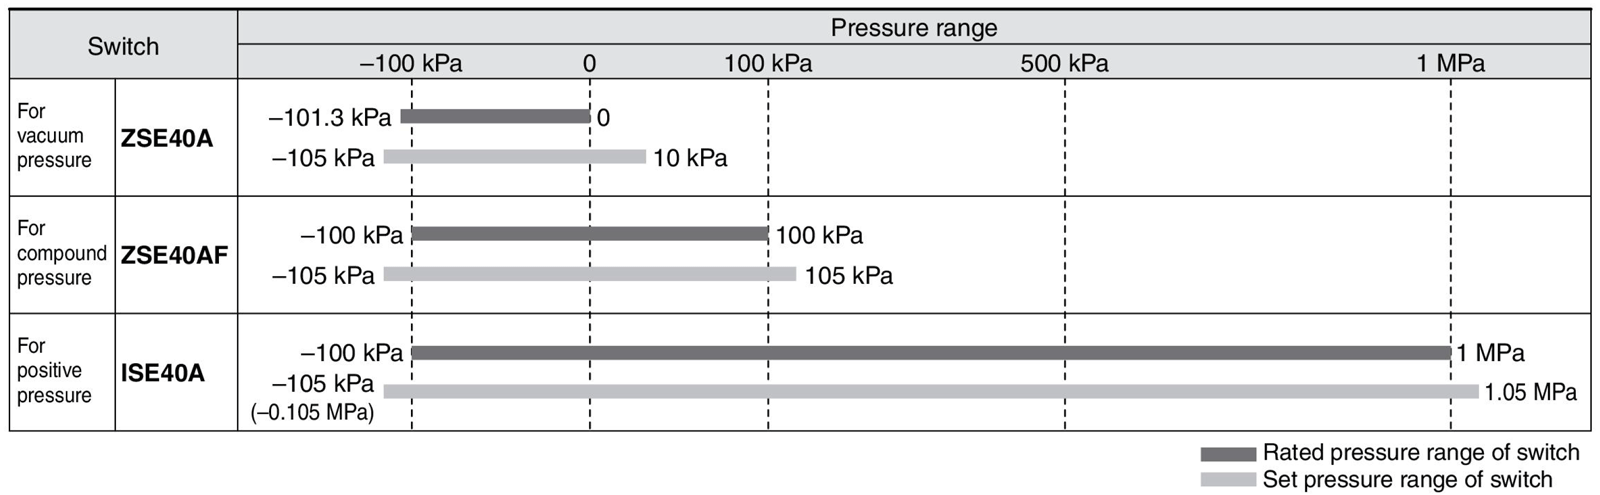 Graph of switch rated pressure range / set pressure range